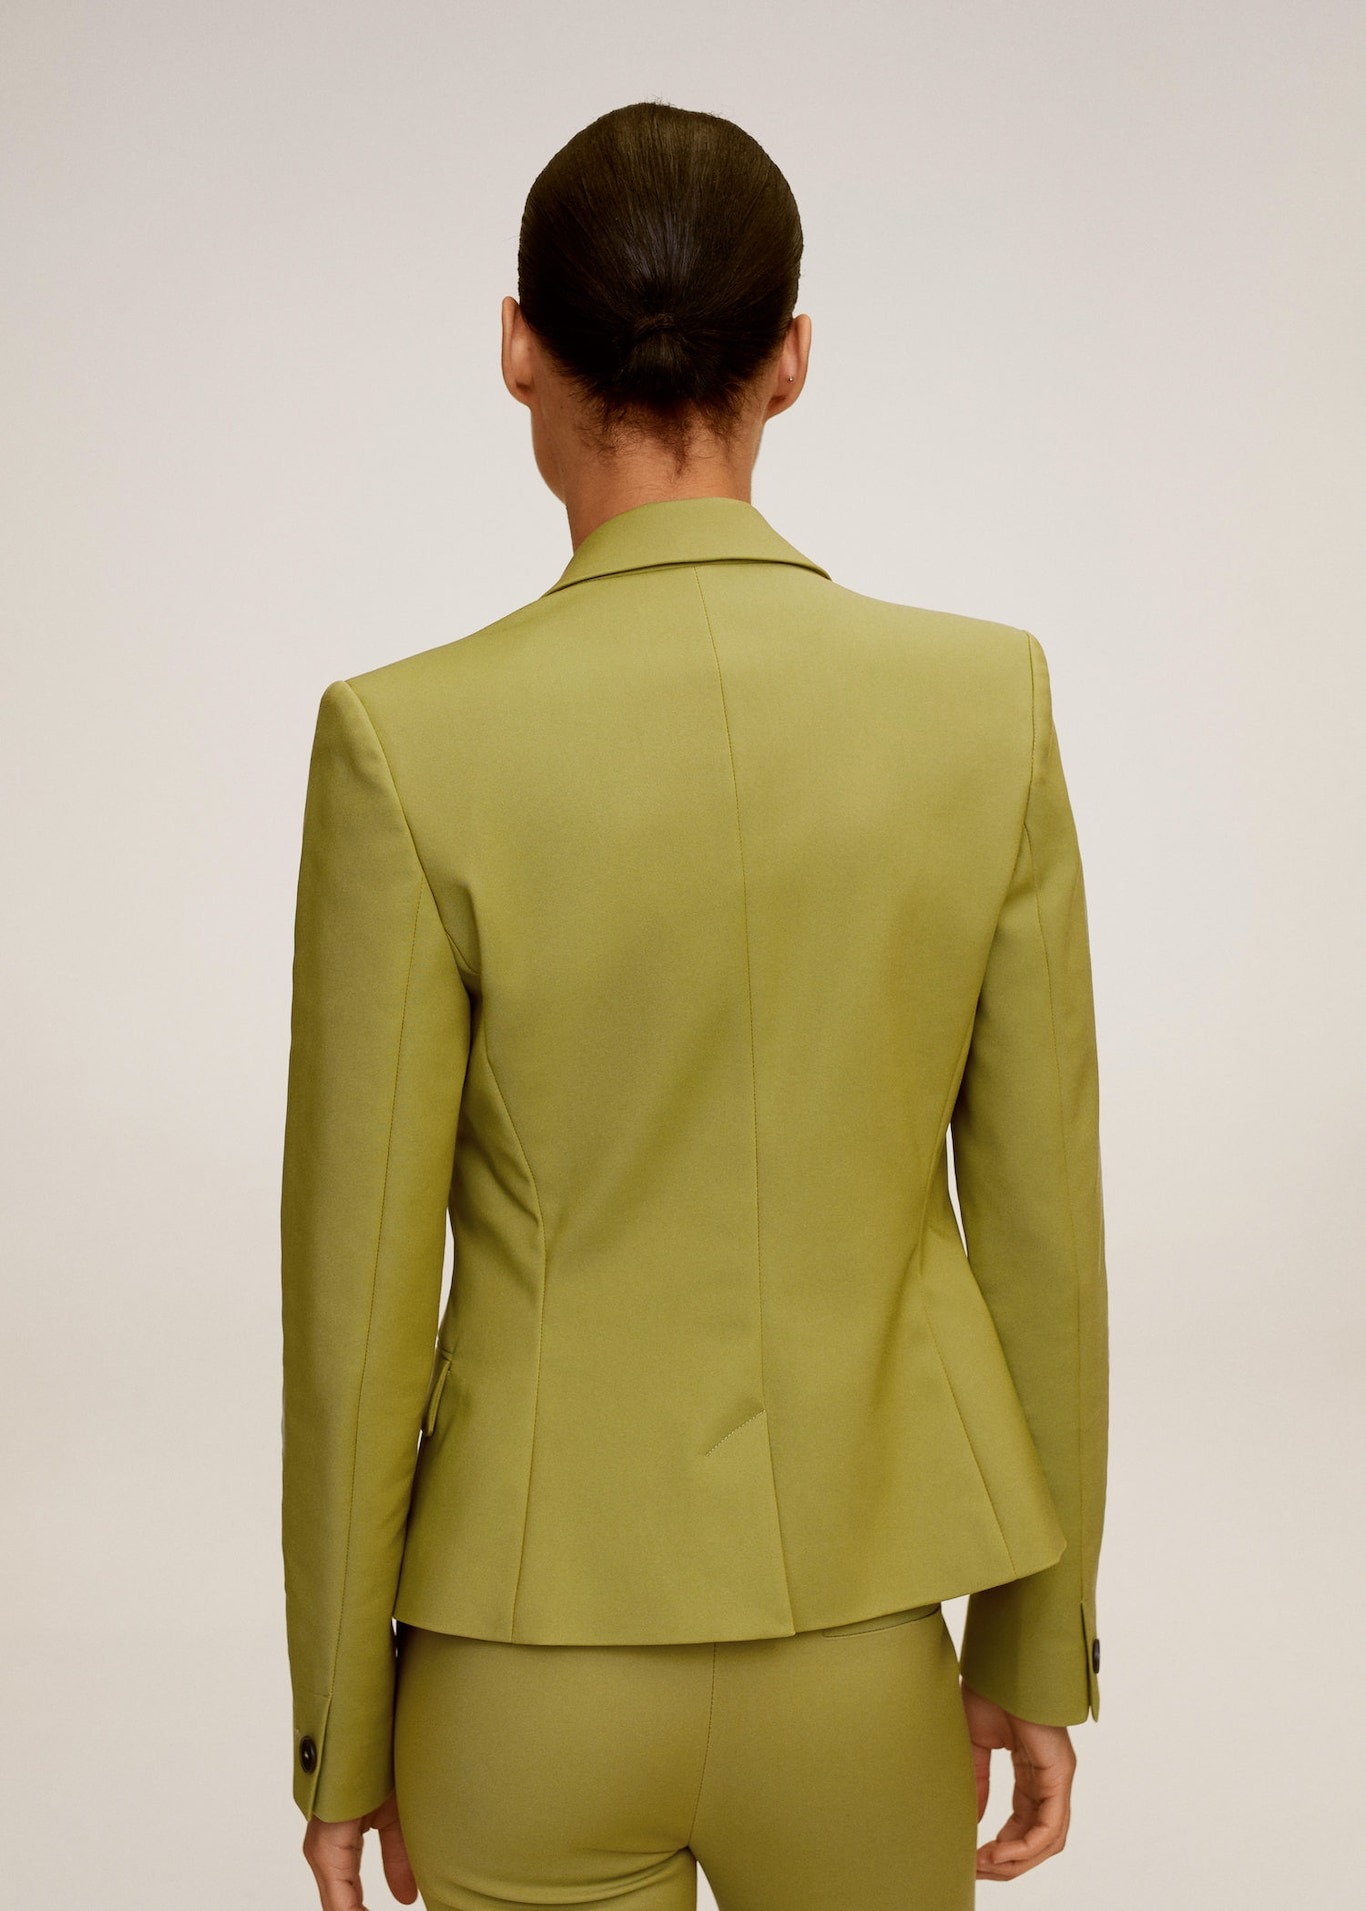 Mango 77092888 Structured suit blazer Olive green size 38(EU)3